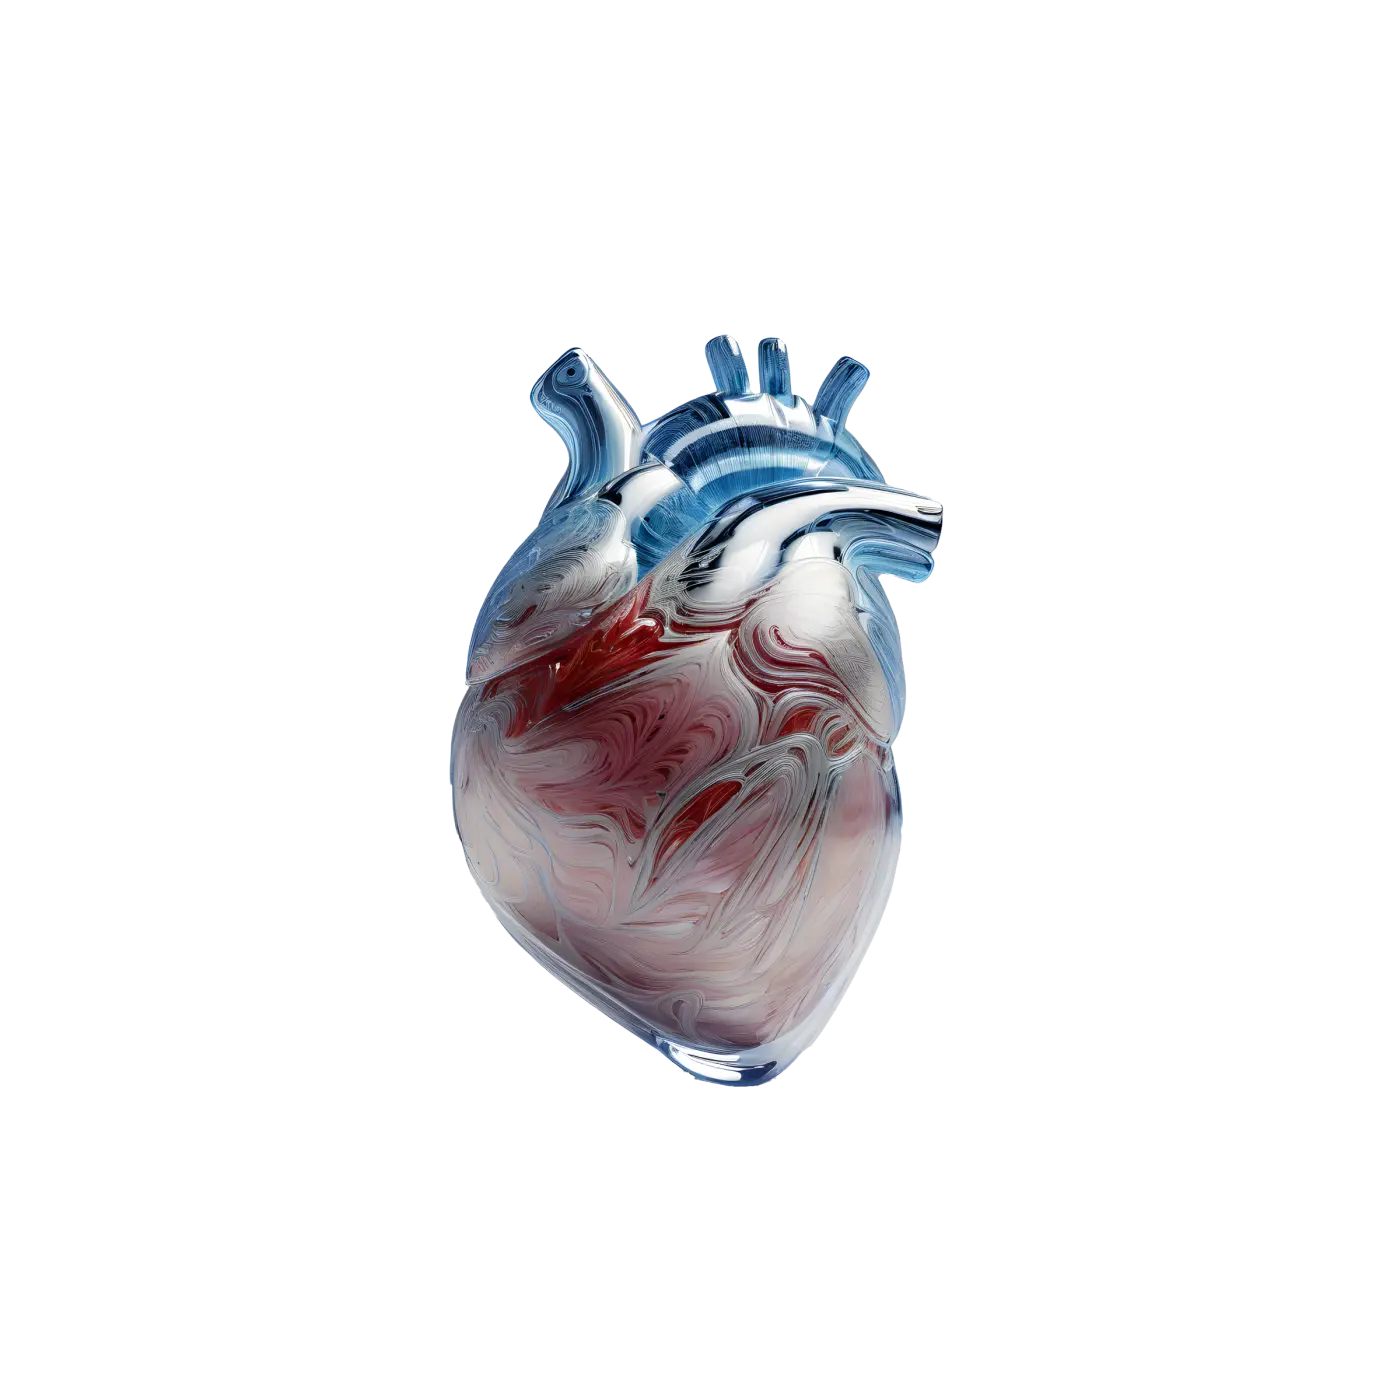 Heart and vascular test